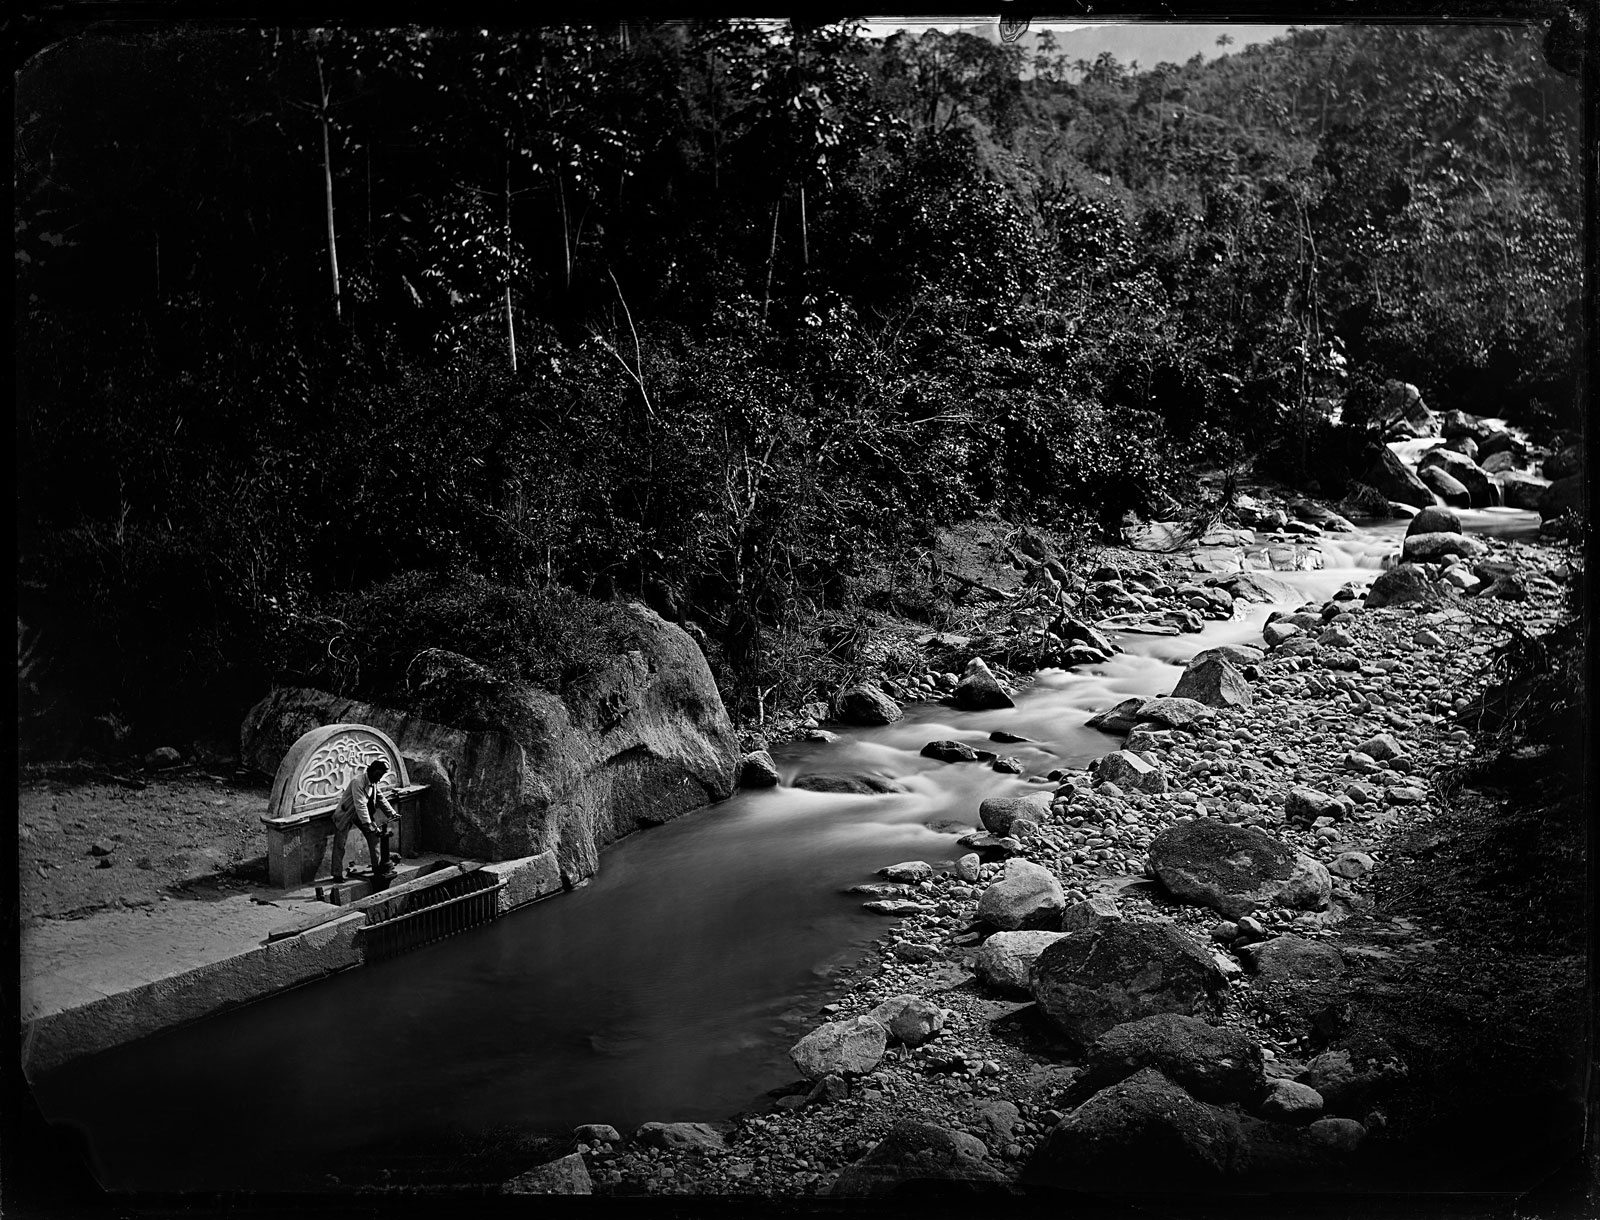 Water supply works, Rio d’ouro dam, circa 1888